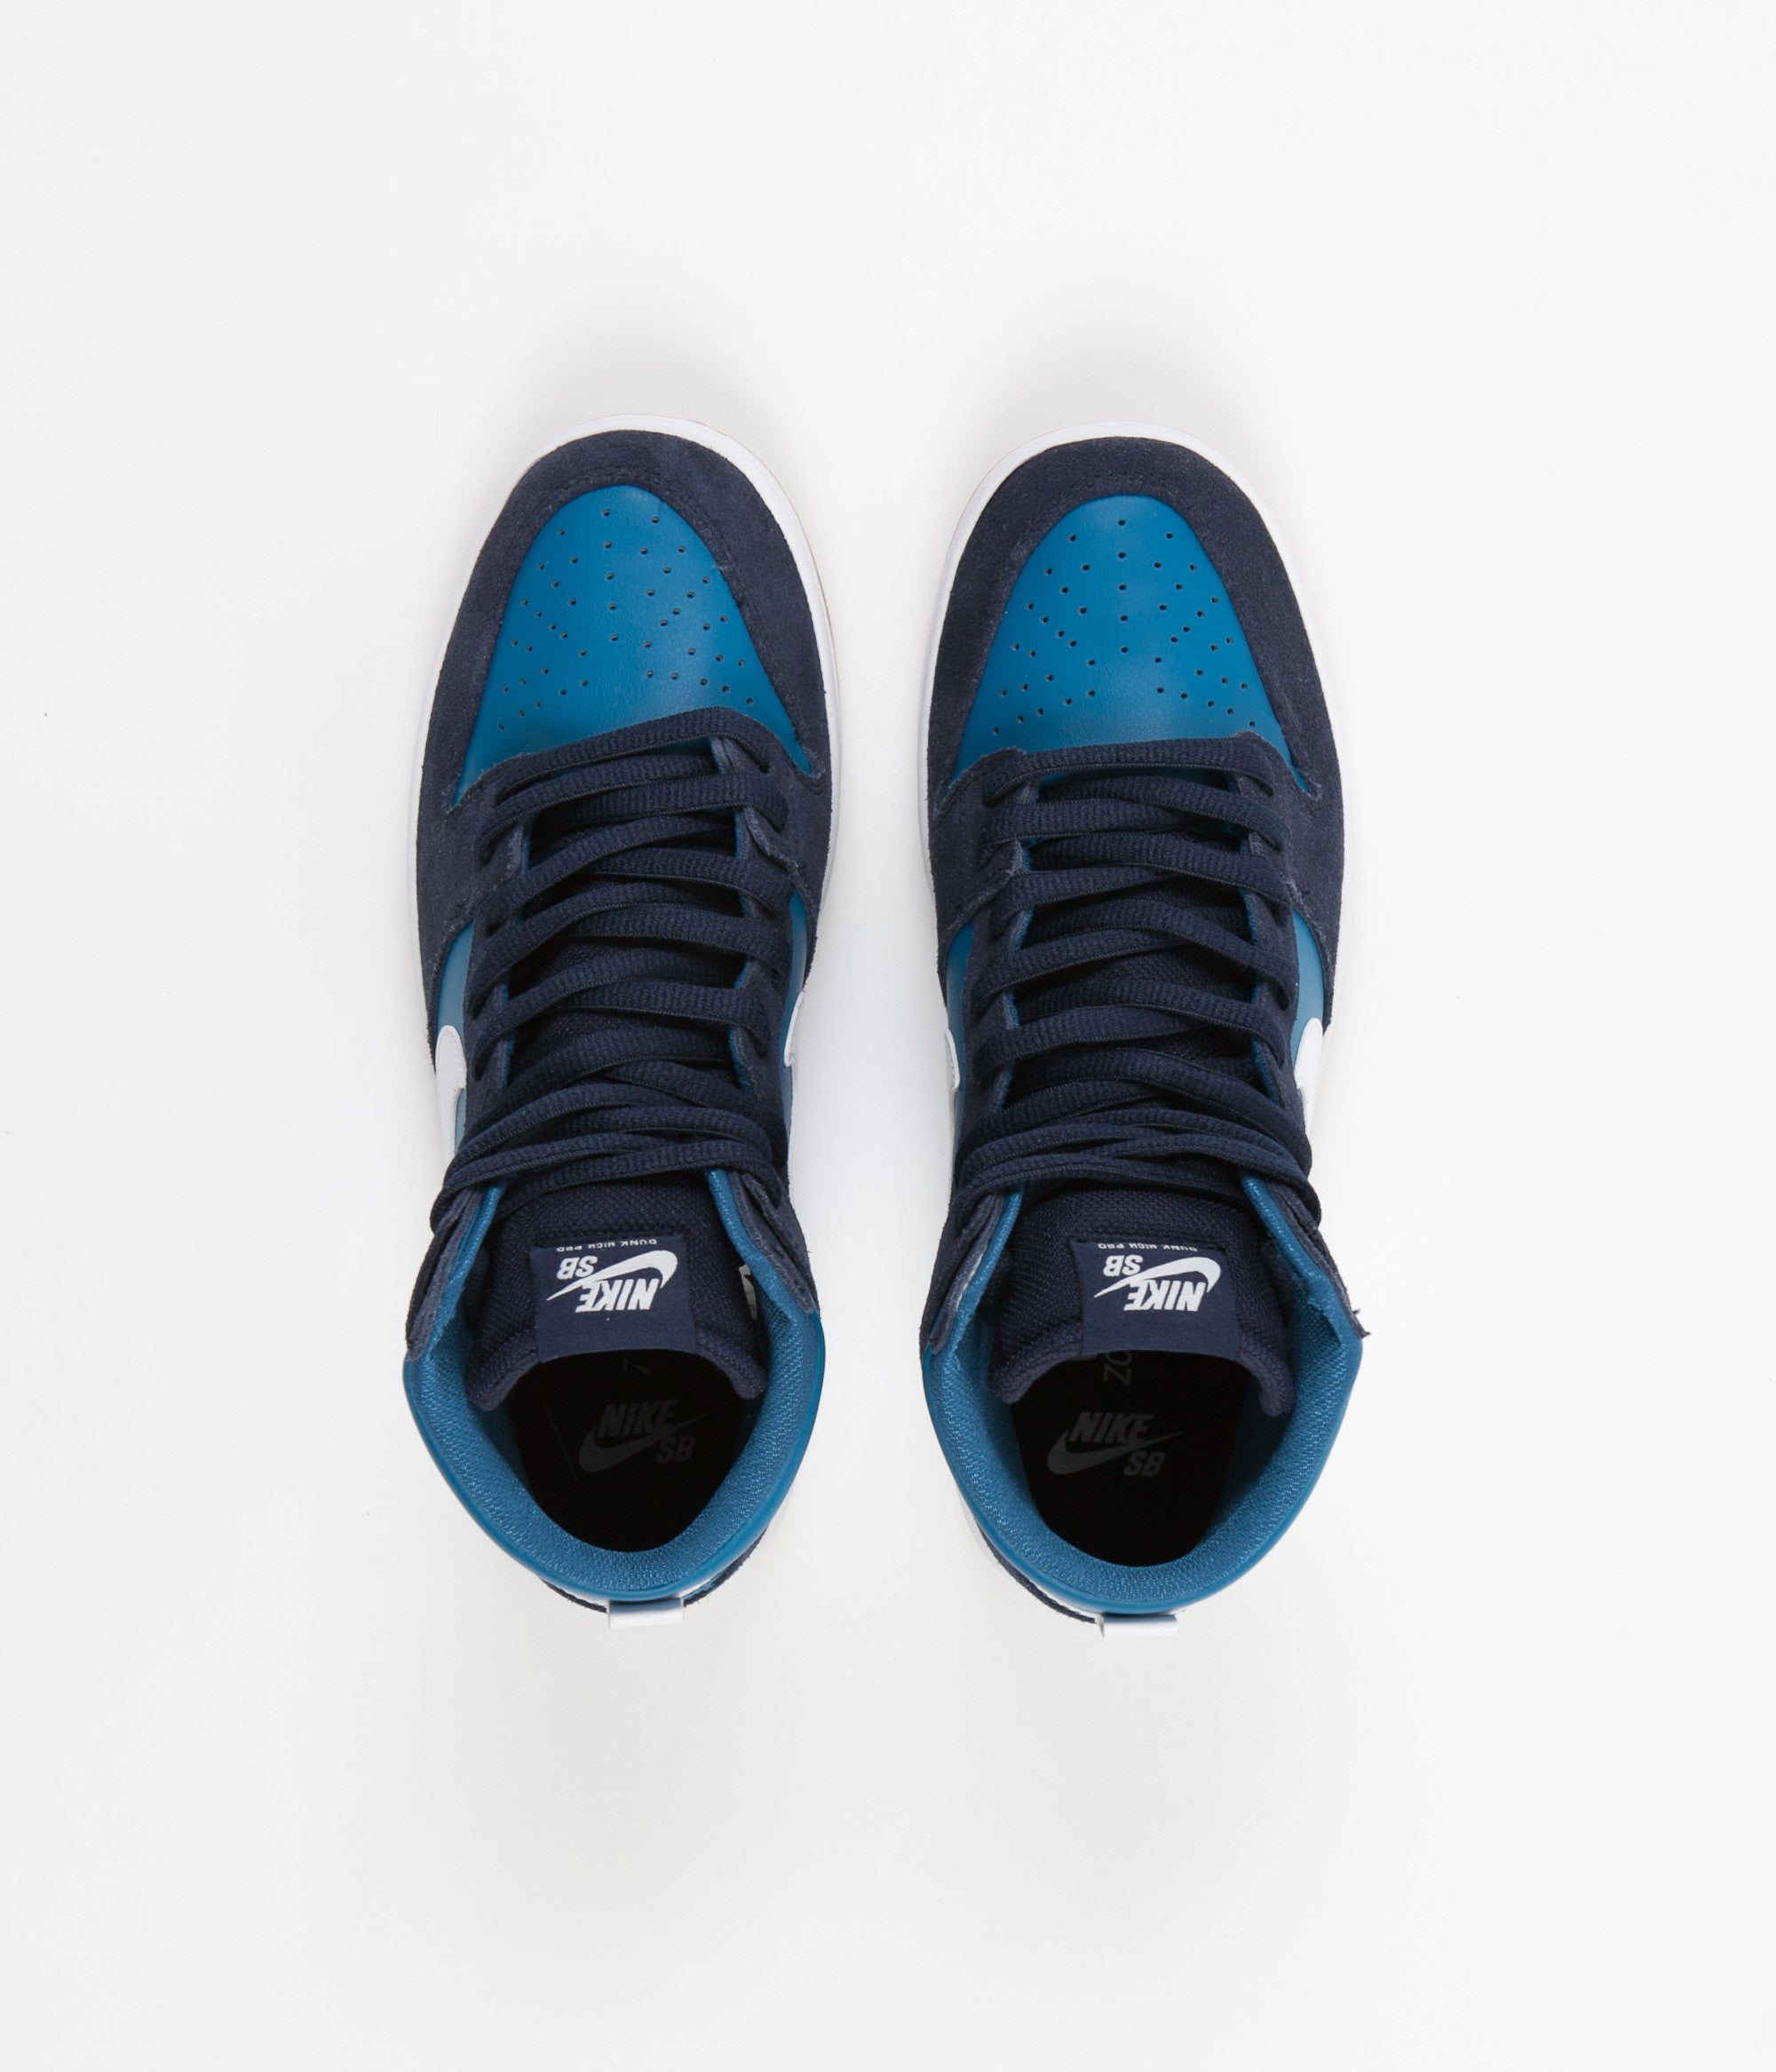 Nike SB Dunk High Pro Shoes - Obsidian 